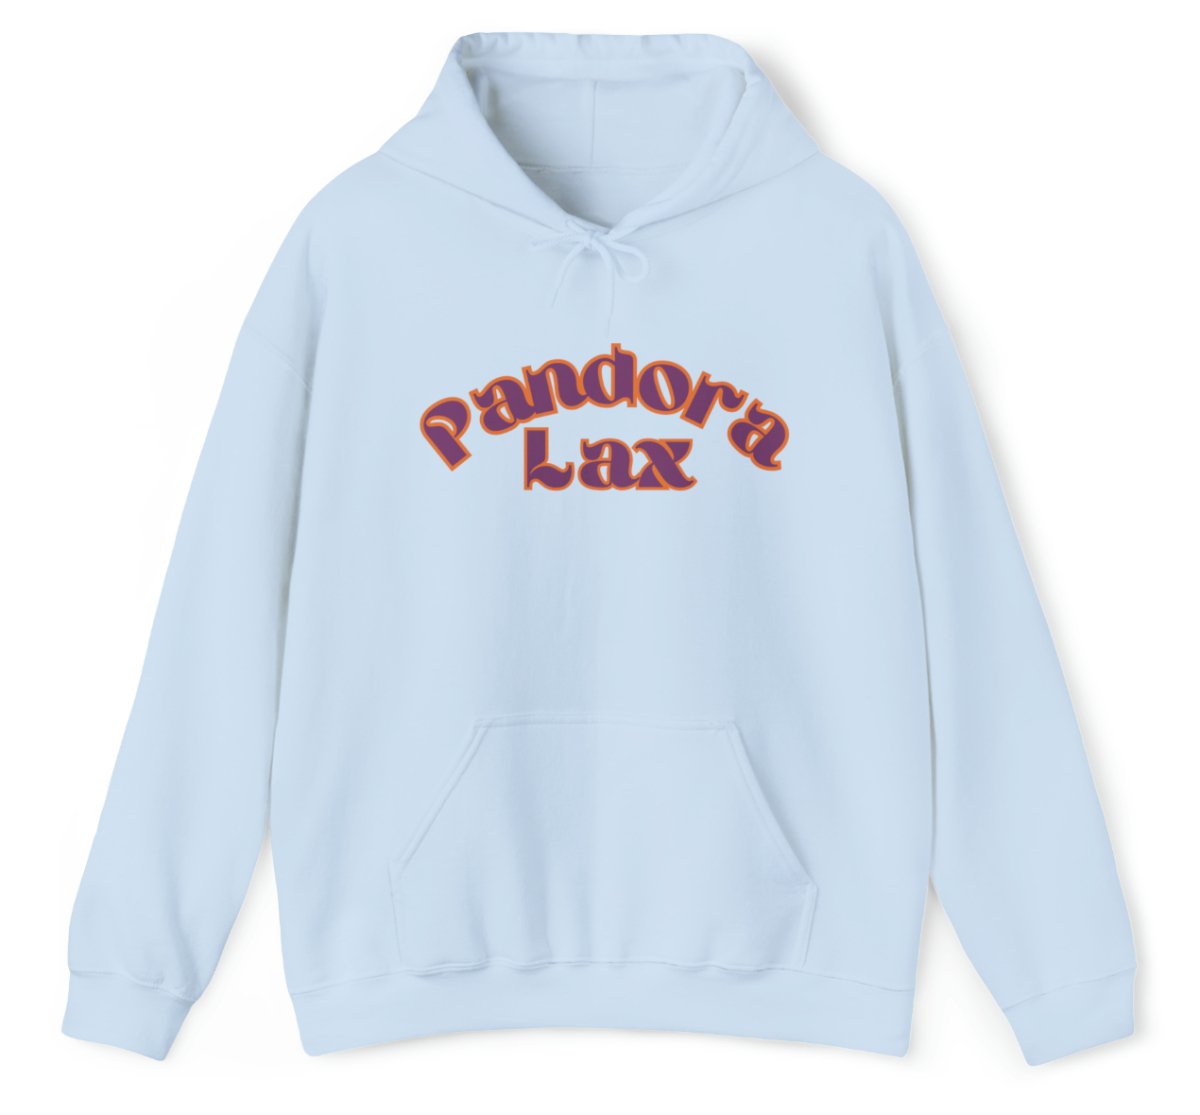 Pandora Lax Logo Hoodie - The Luua Company